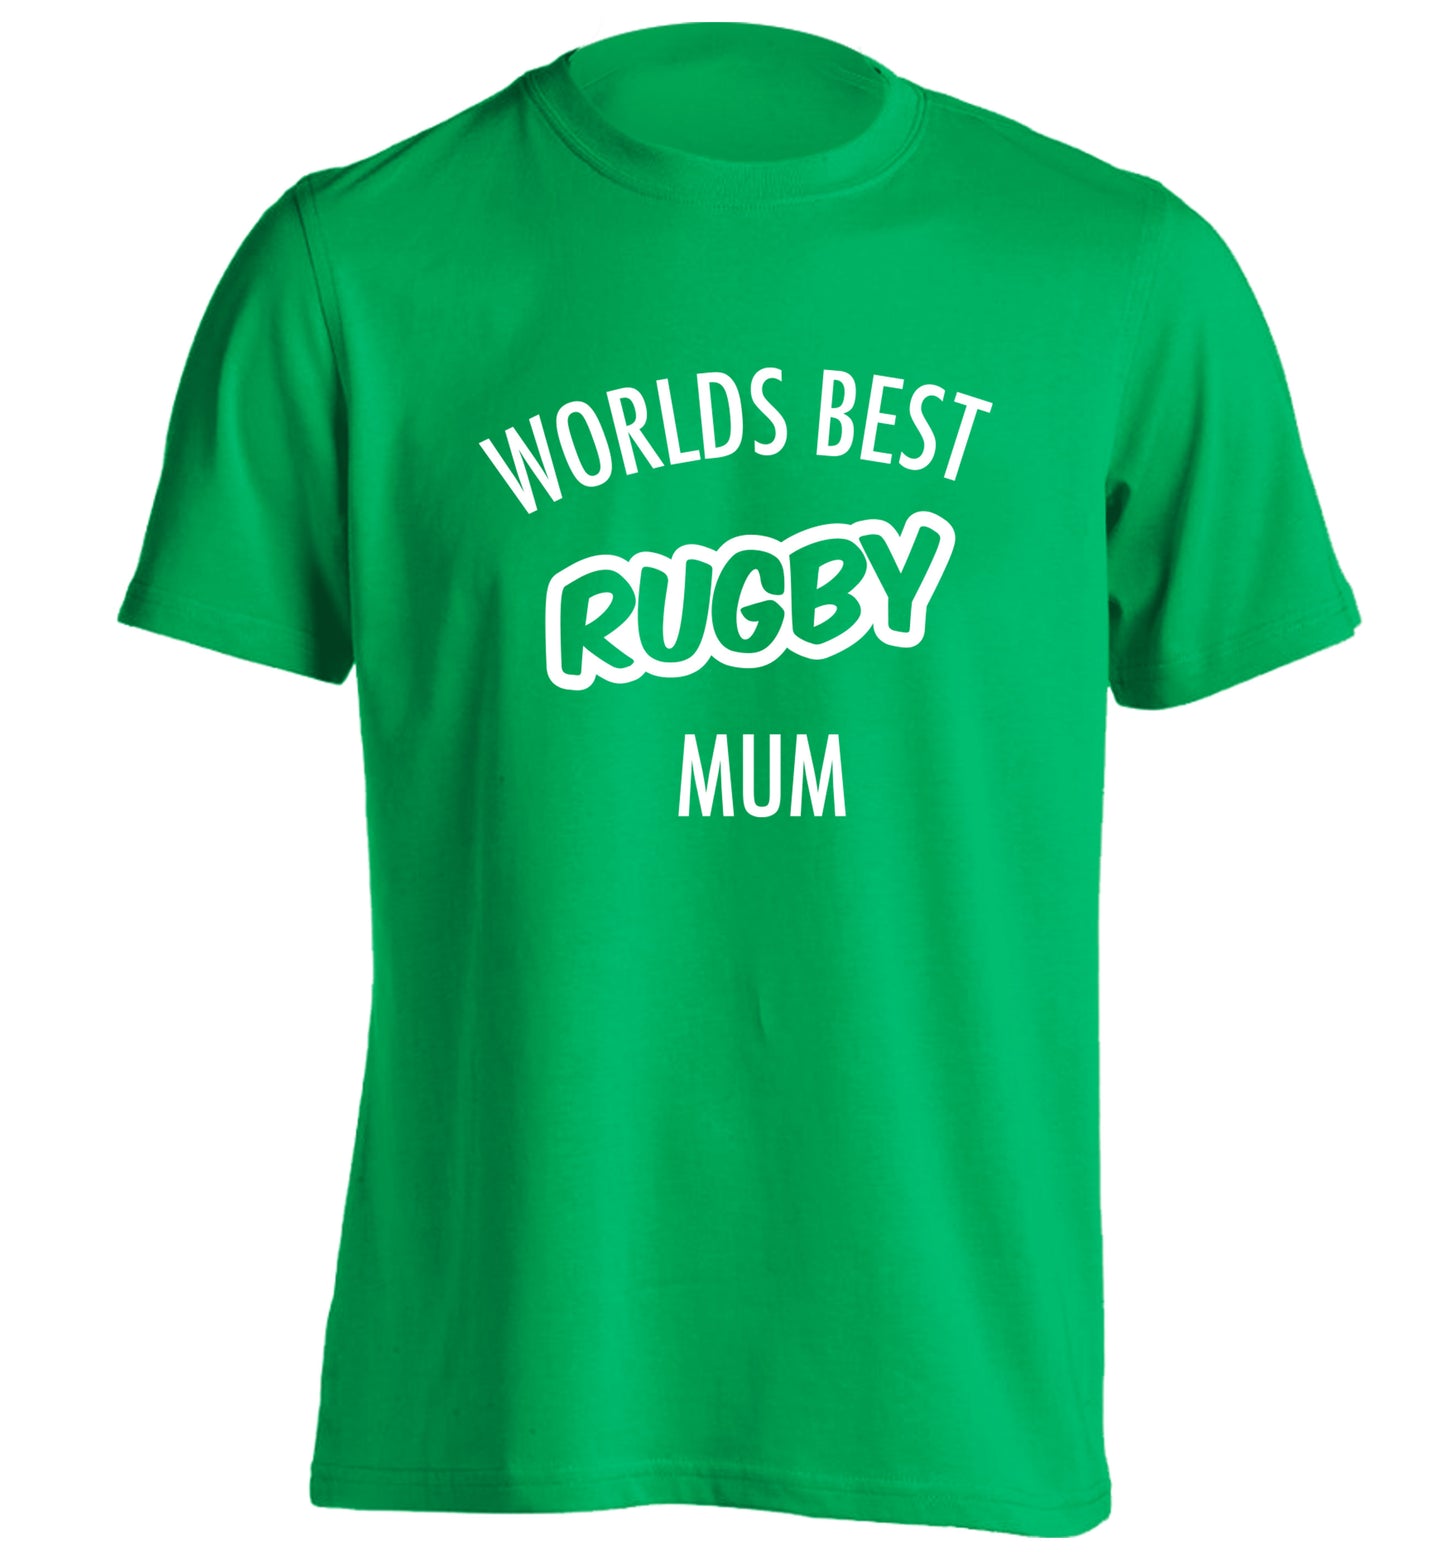 Worlds best rugby mum adults unisex green Tshirt 2XL